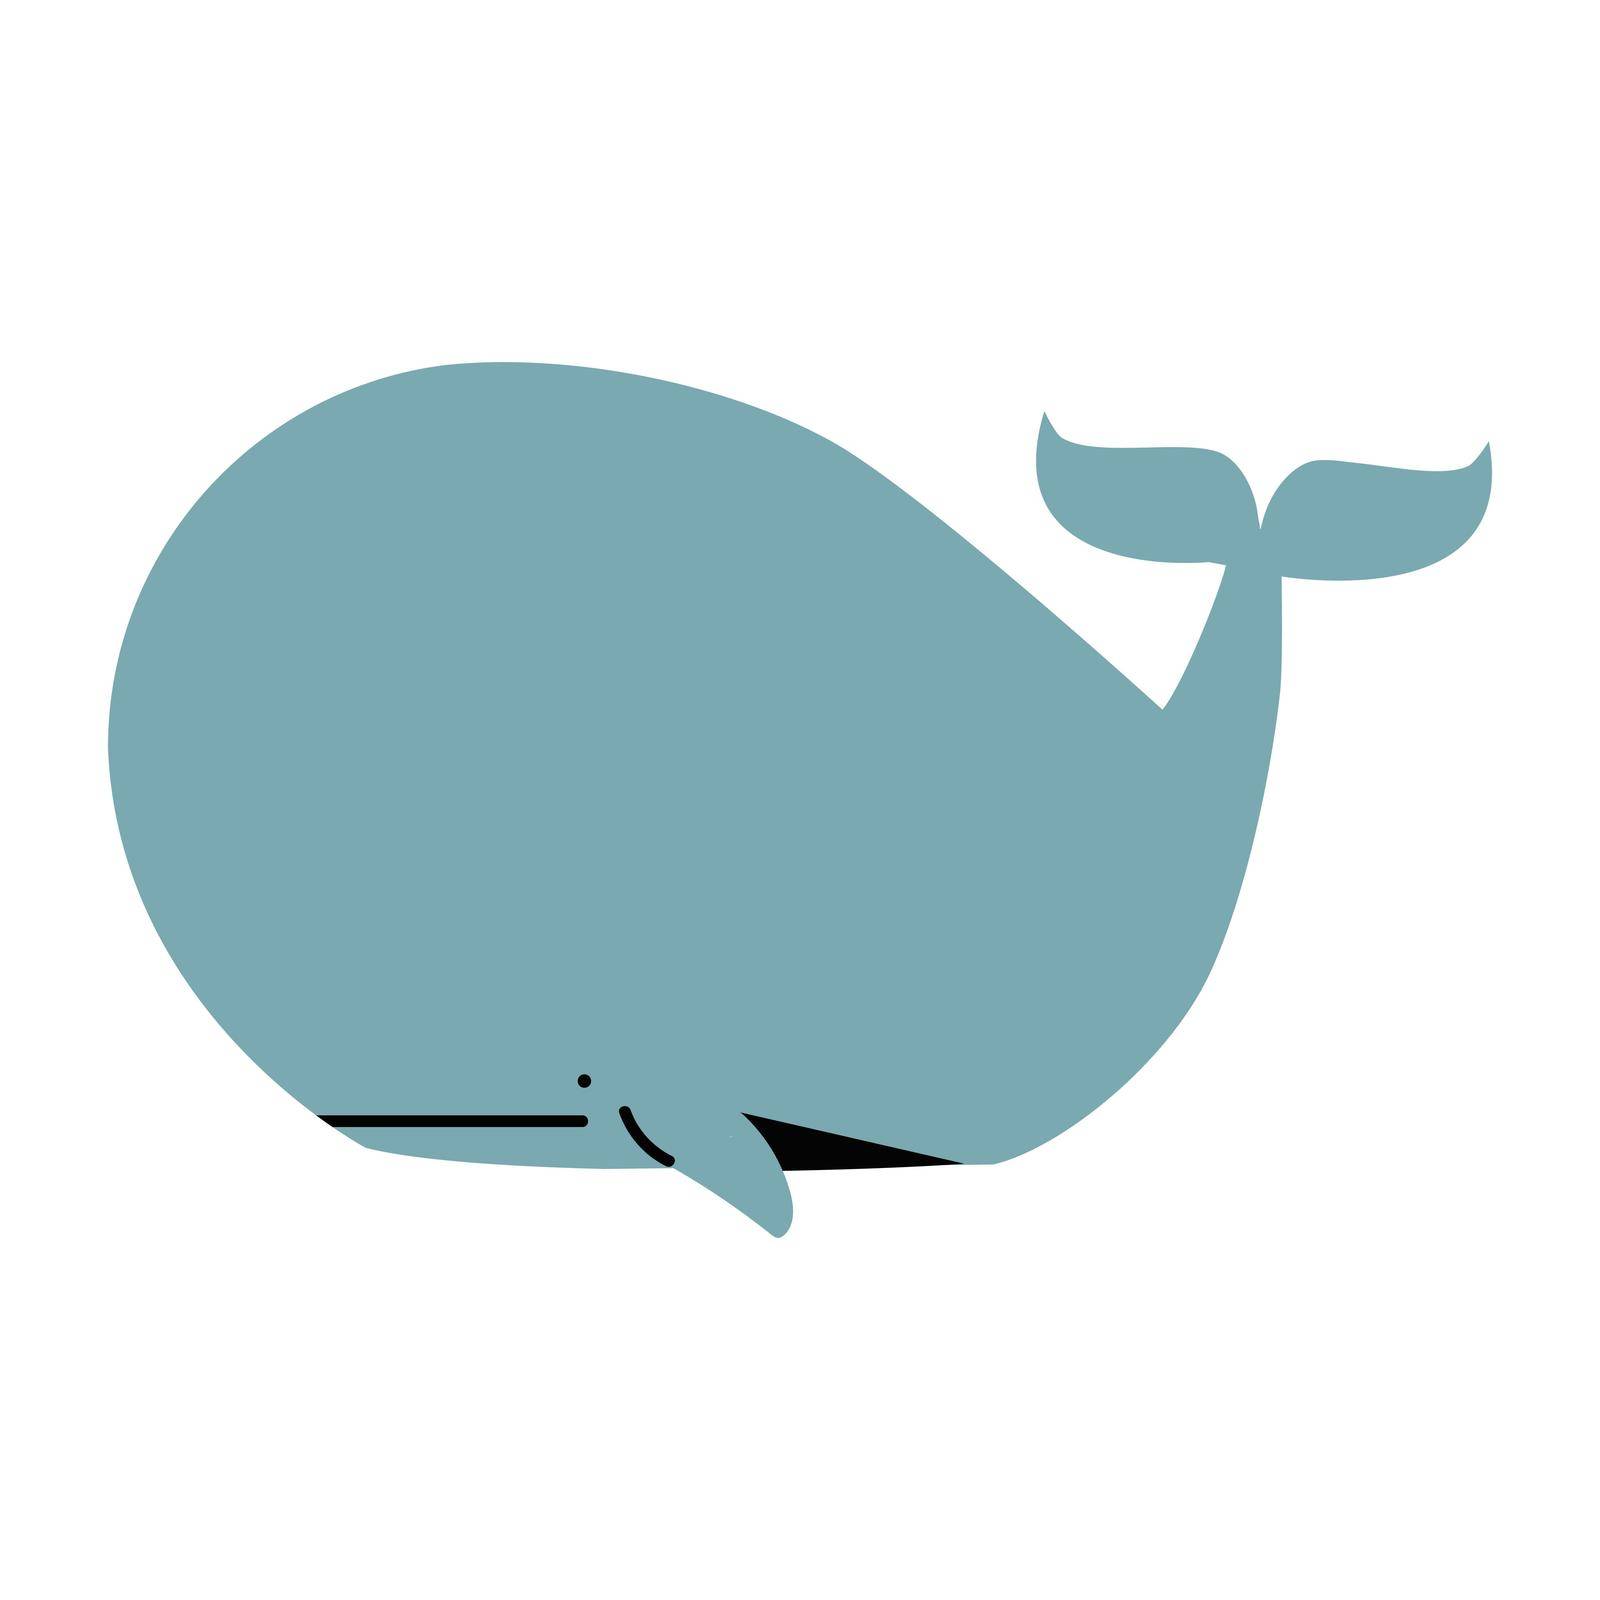 Big Whale Fish flat animal icon